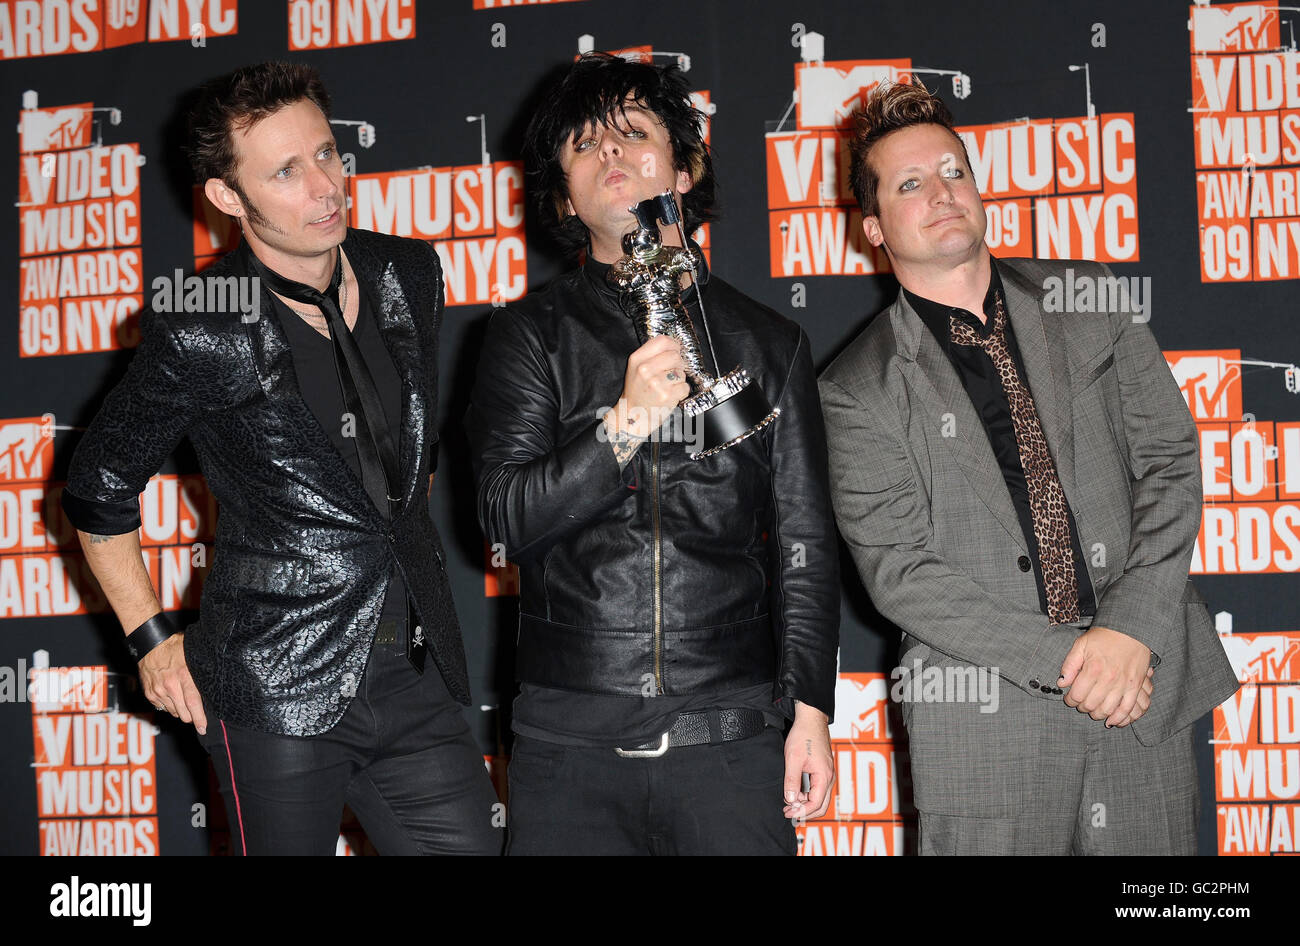 MTV Video Music Awards 2009 - Press Room - New York Stock Photo